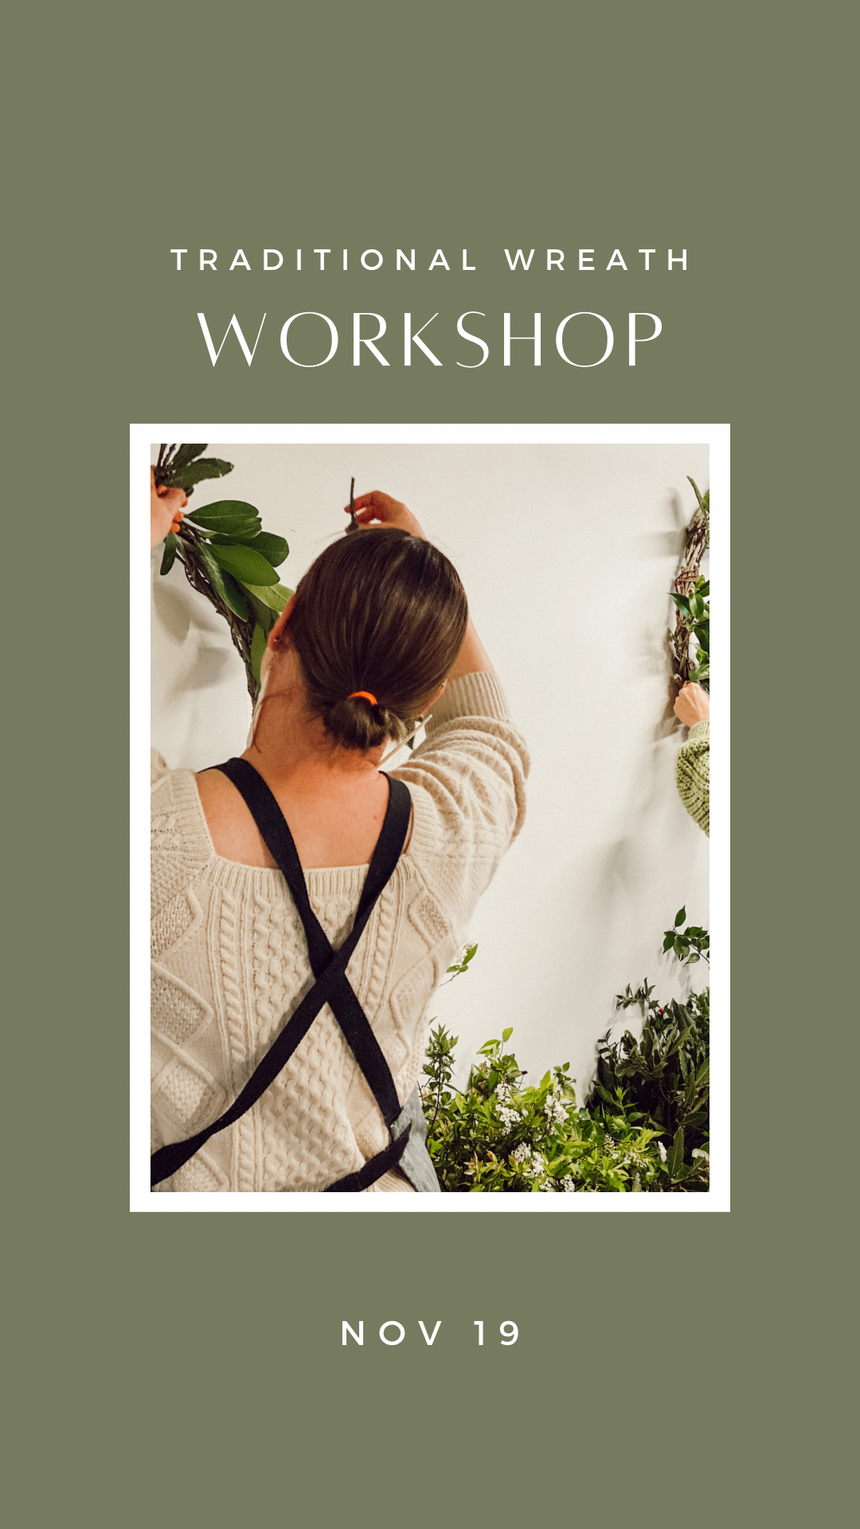 Wreath Workshop November 19th